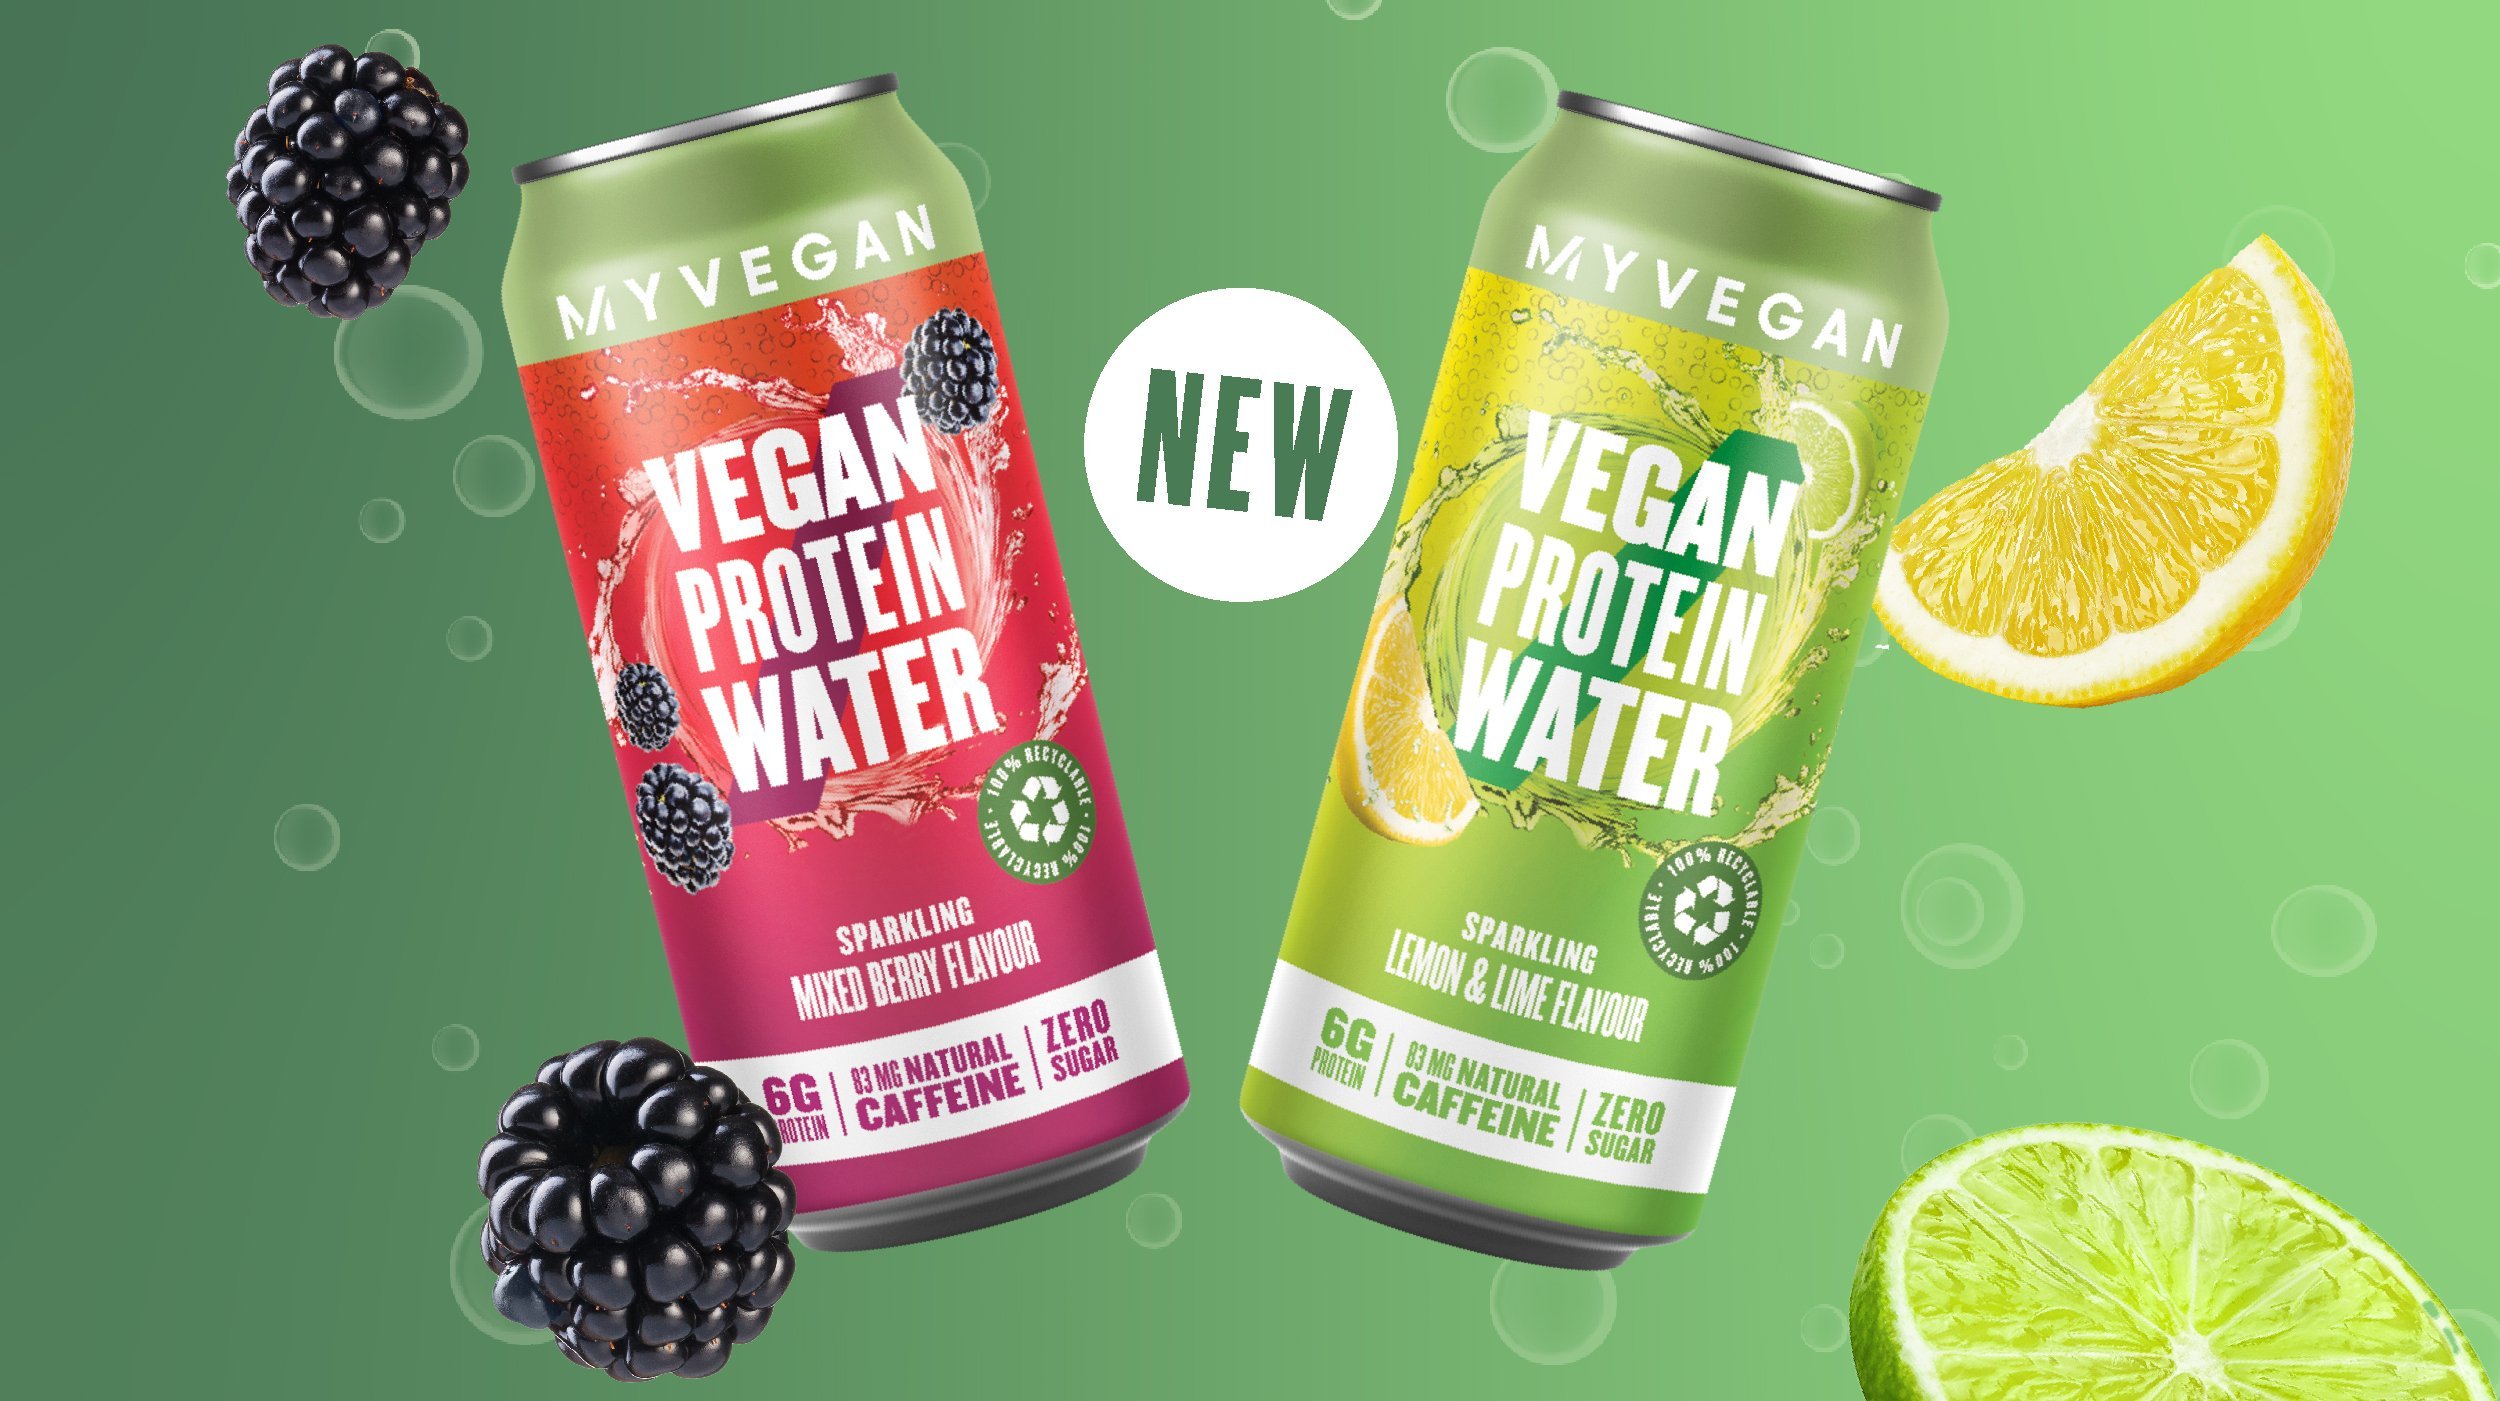 Sparkling Vegan Protein Water | Myvegan